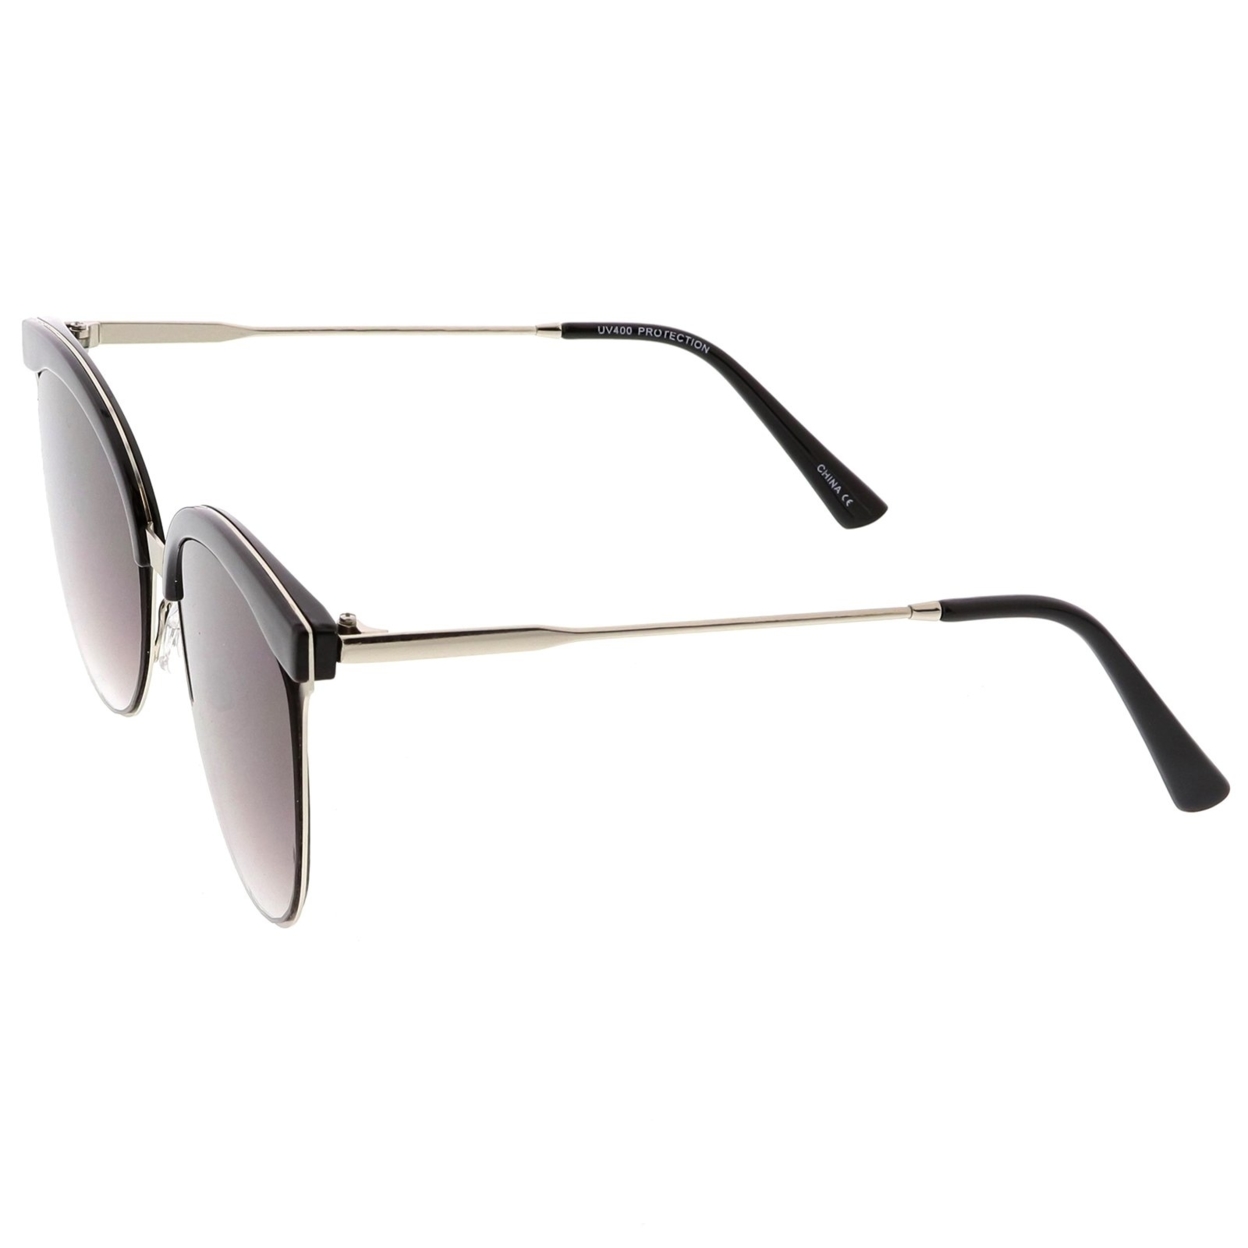 Modern Semi Rimless Cat Eye Sunglasses Cutout Slim Arms Flat Lens 55mm - Black Gold / Smoke